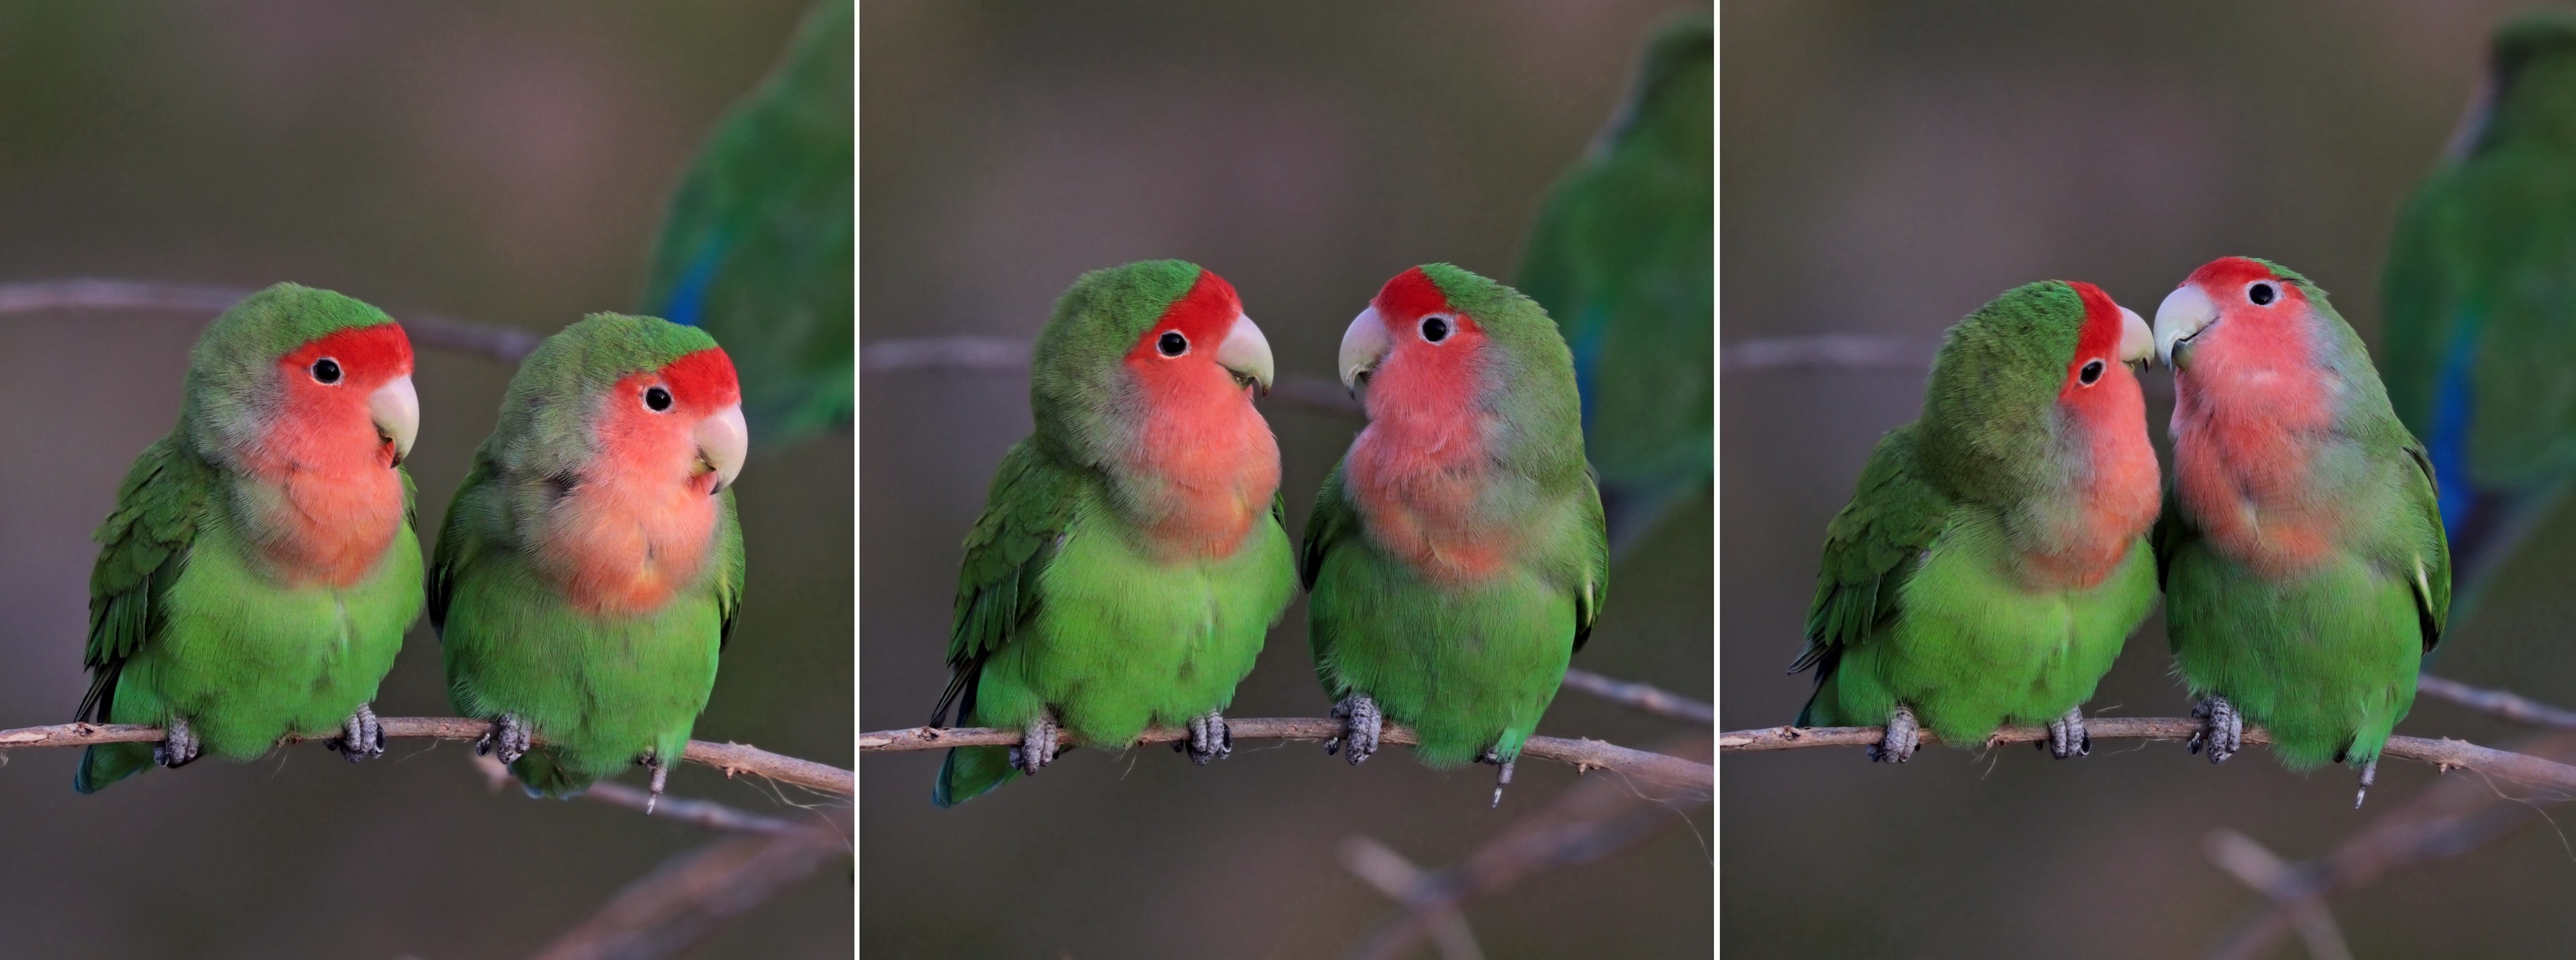 Rosy-faced lovebirds (Agapornis roseicollis roseicollis) composite